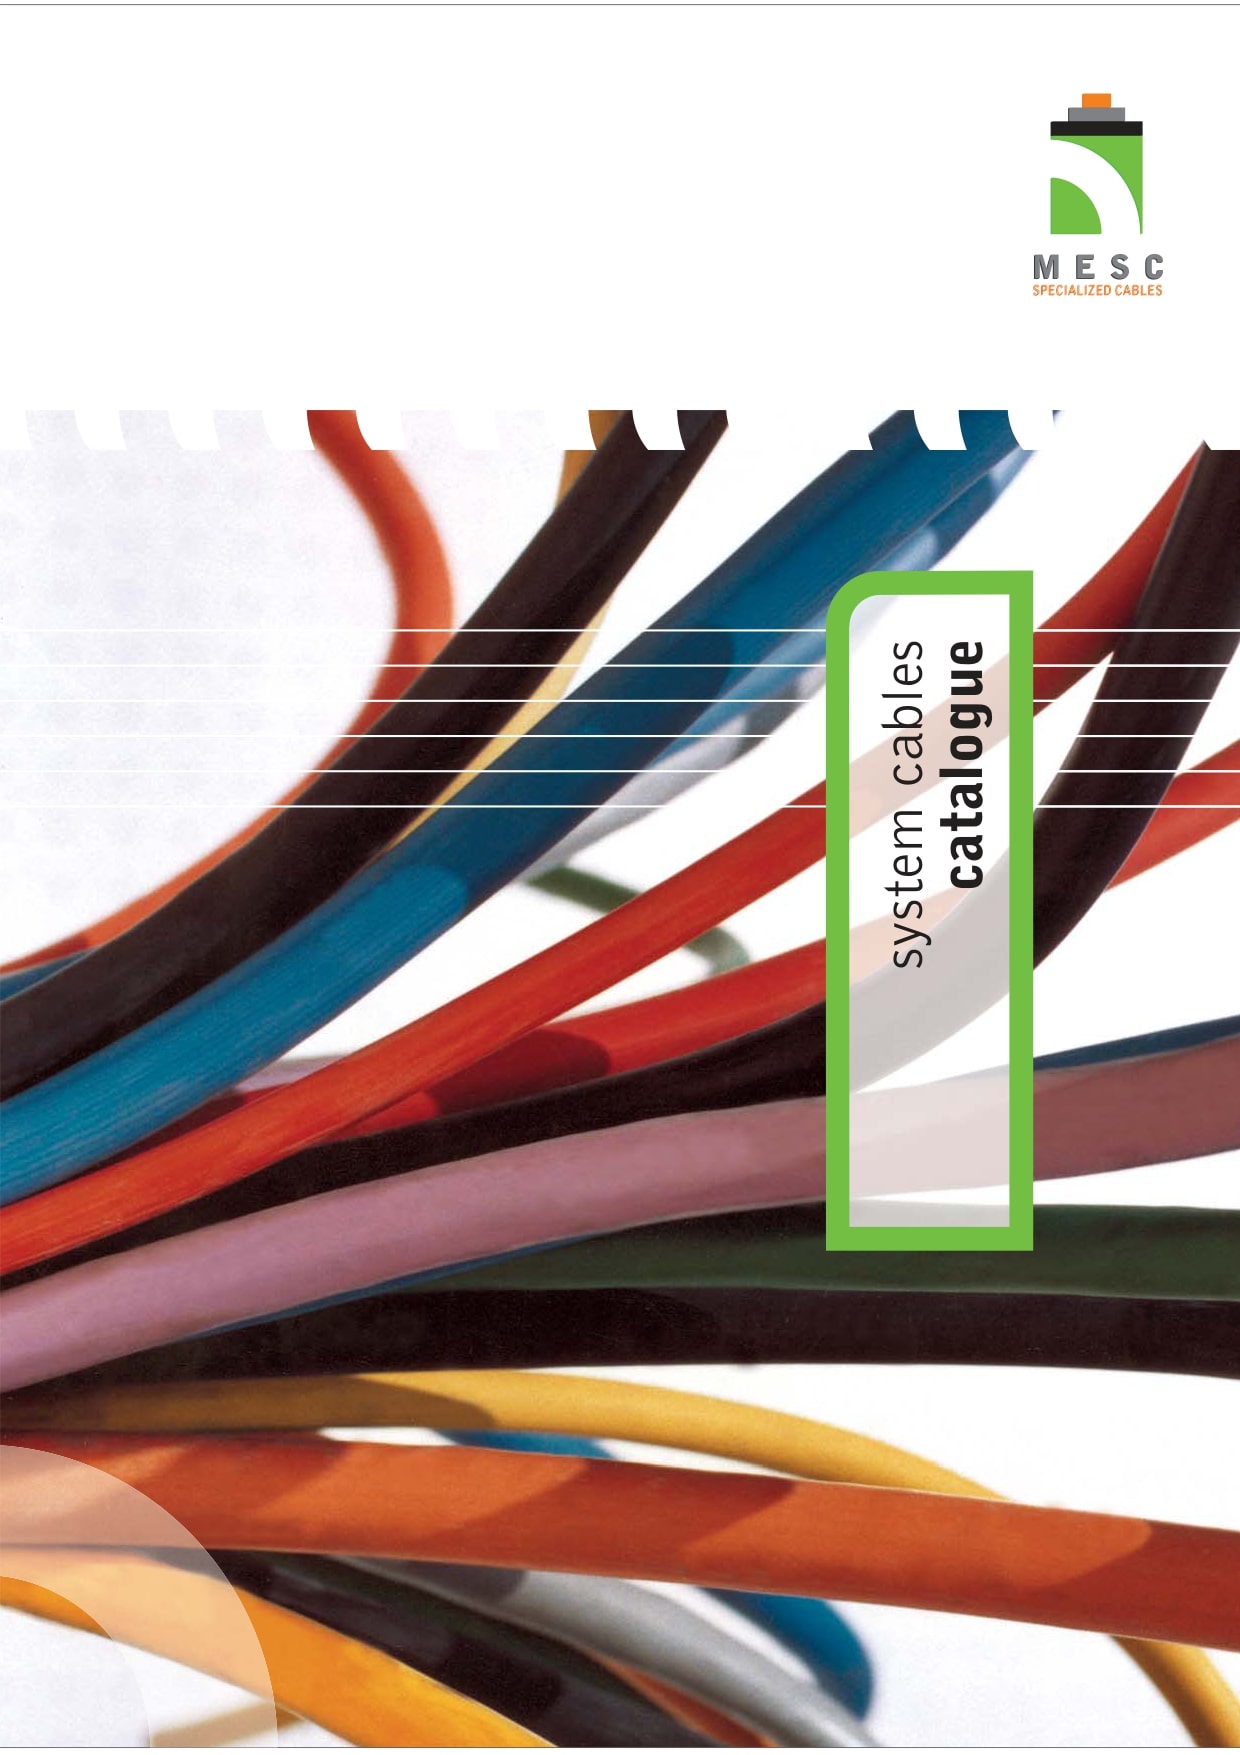 MESCSystem Cables Catalogue